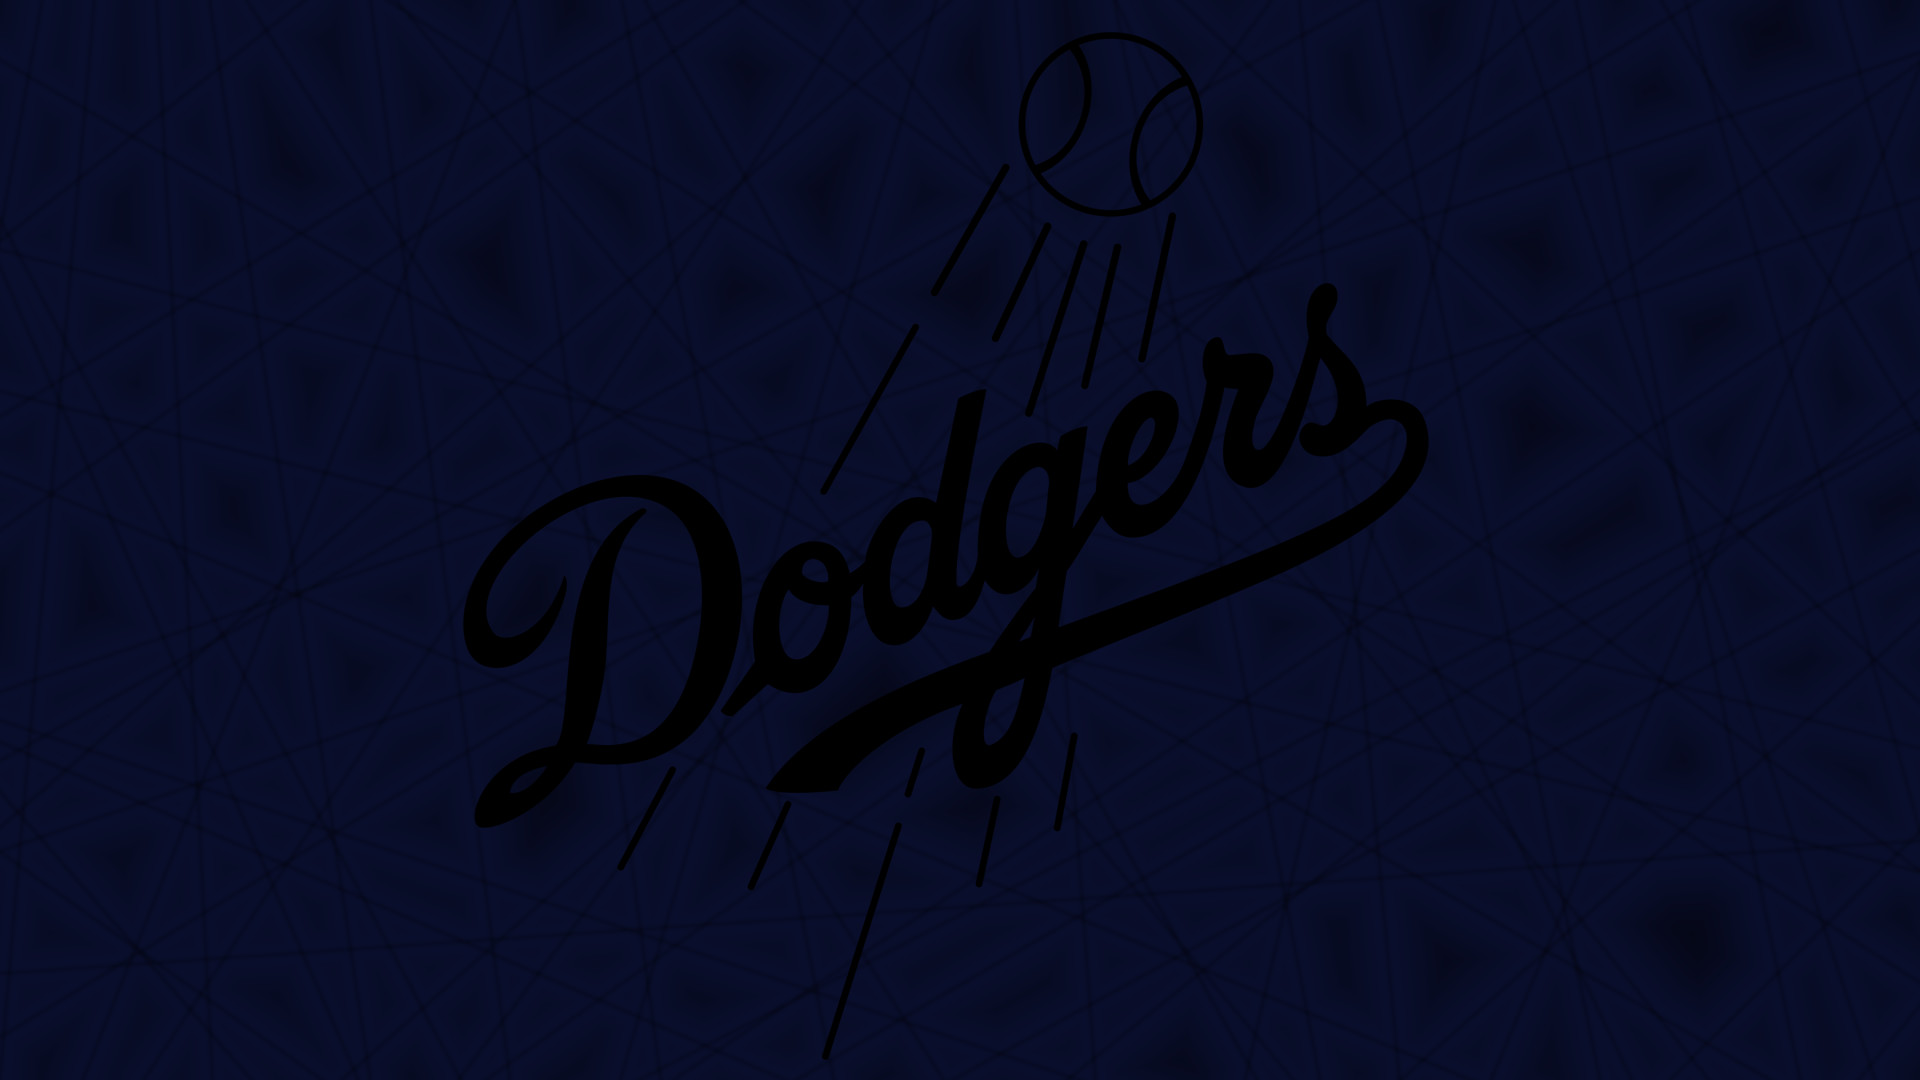 1920x1080 Best 25 Los angeles dodgers ideas on Pinterest | Dodgers baseball .